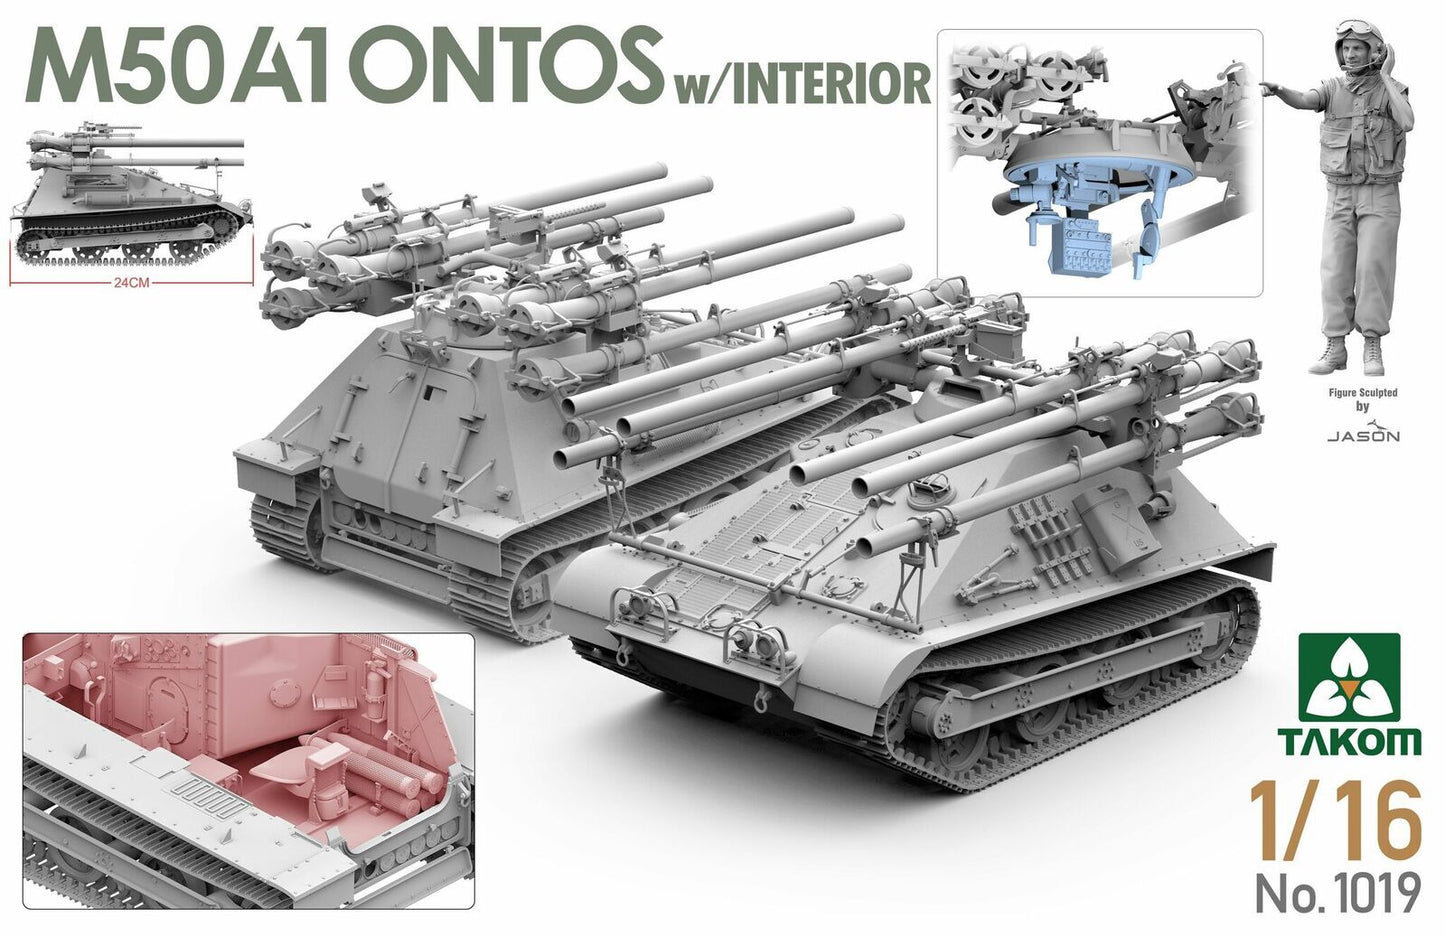 Takom 1/16 M50A1 Ontos w/Interior Plastic Model Kit